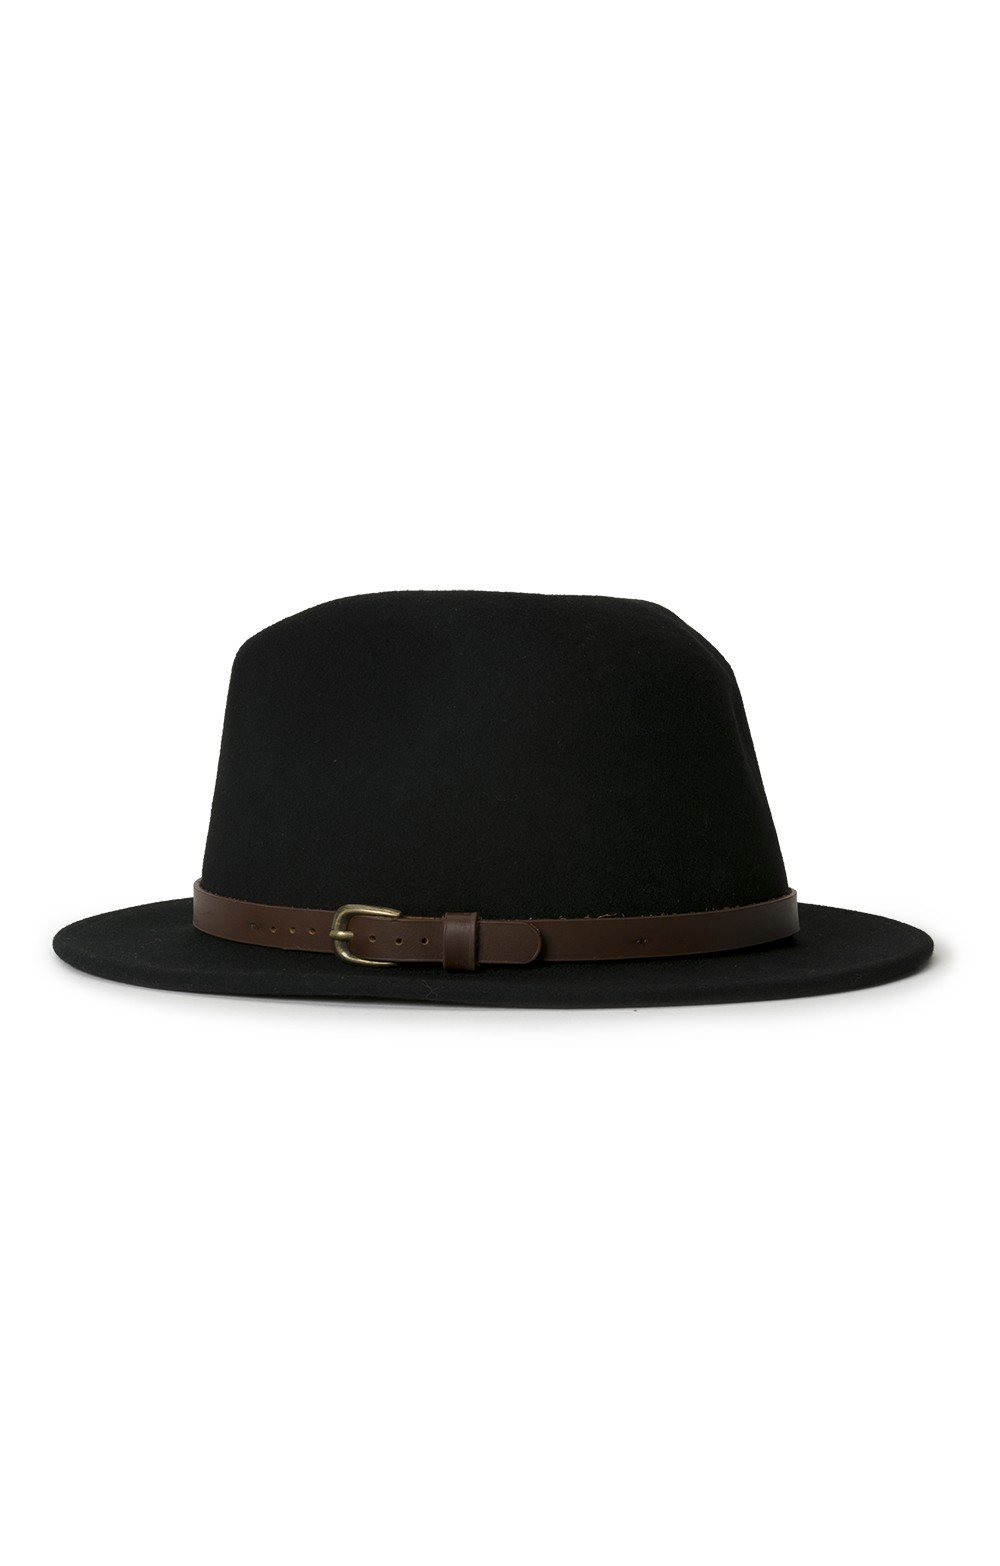 Failsworth Hats Adventurer Felt Hat - Black | XL | Black